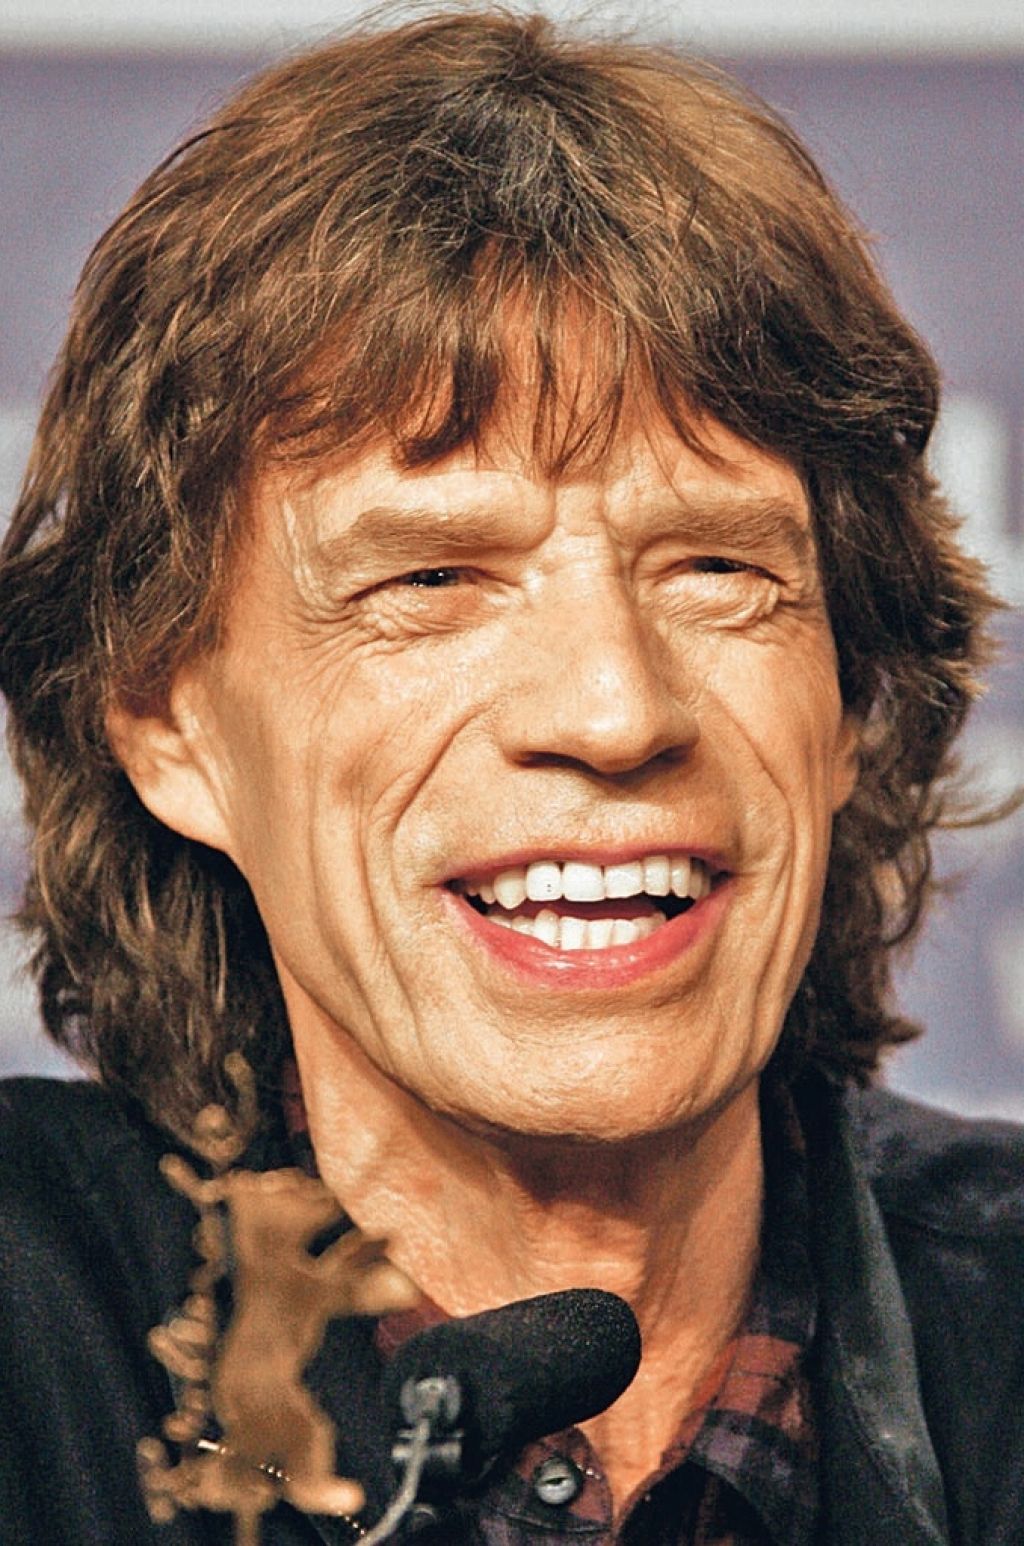 Jagger in Bowie sta skočila med rjuhe?